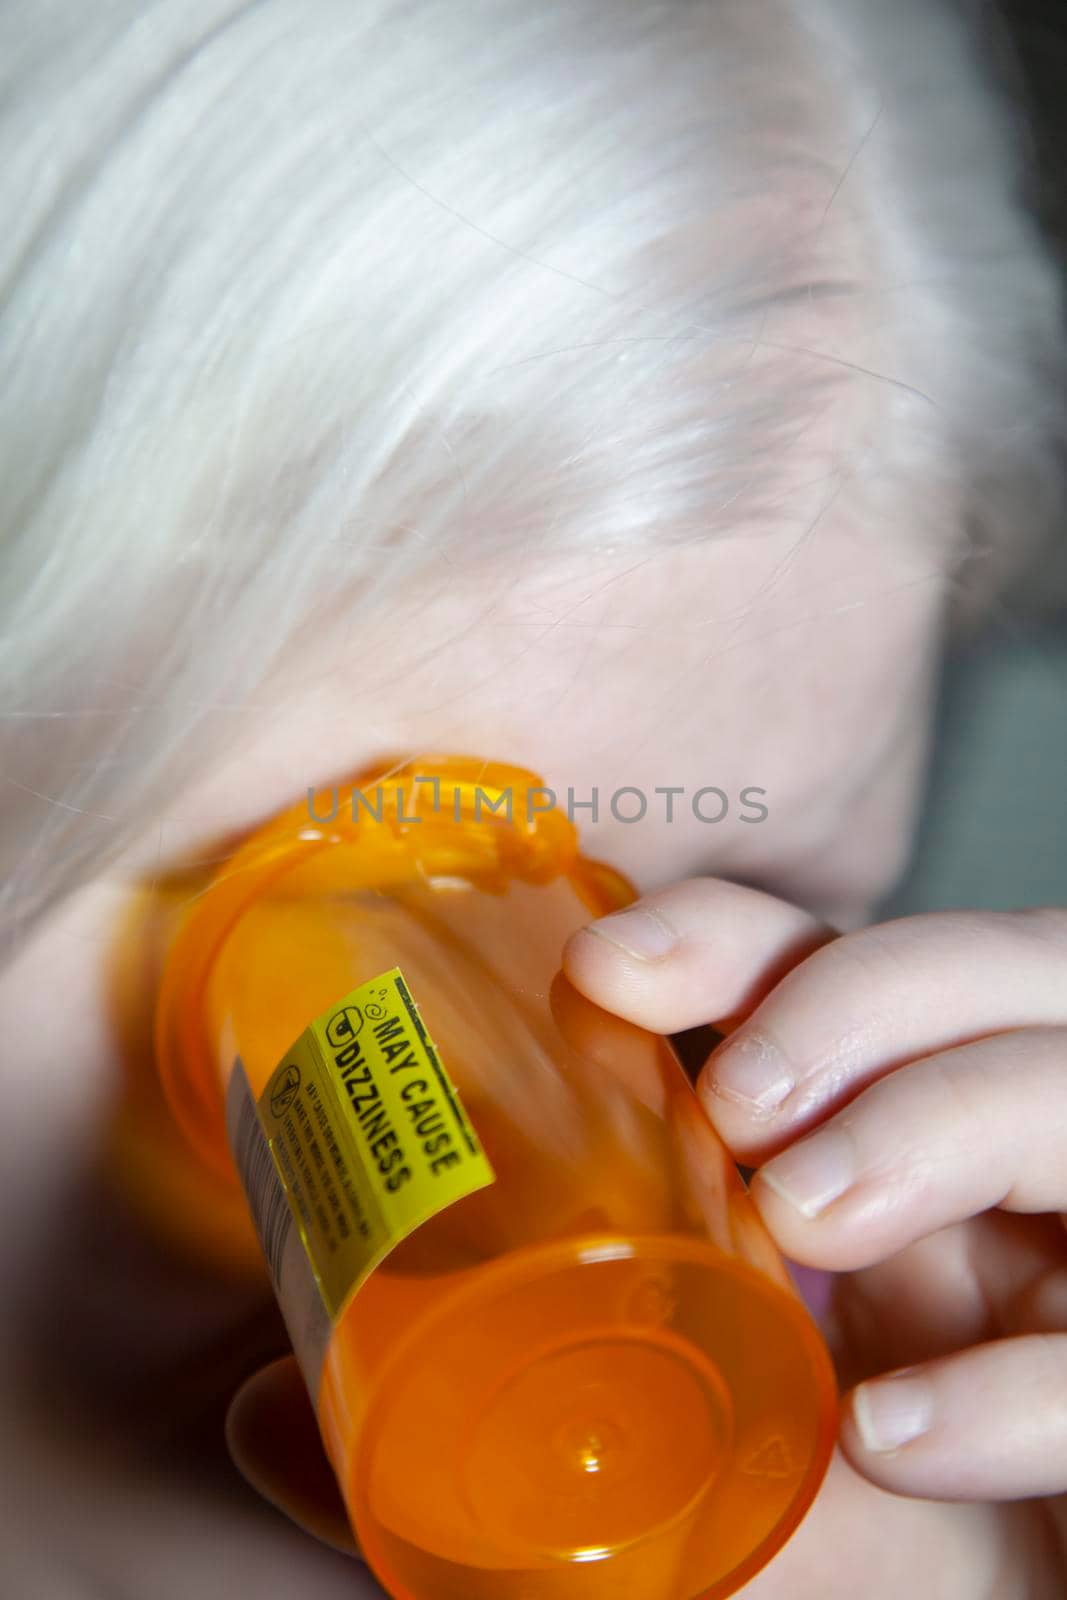 Woman looking desperately into an empty medication bottle